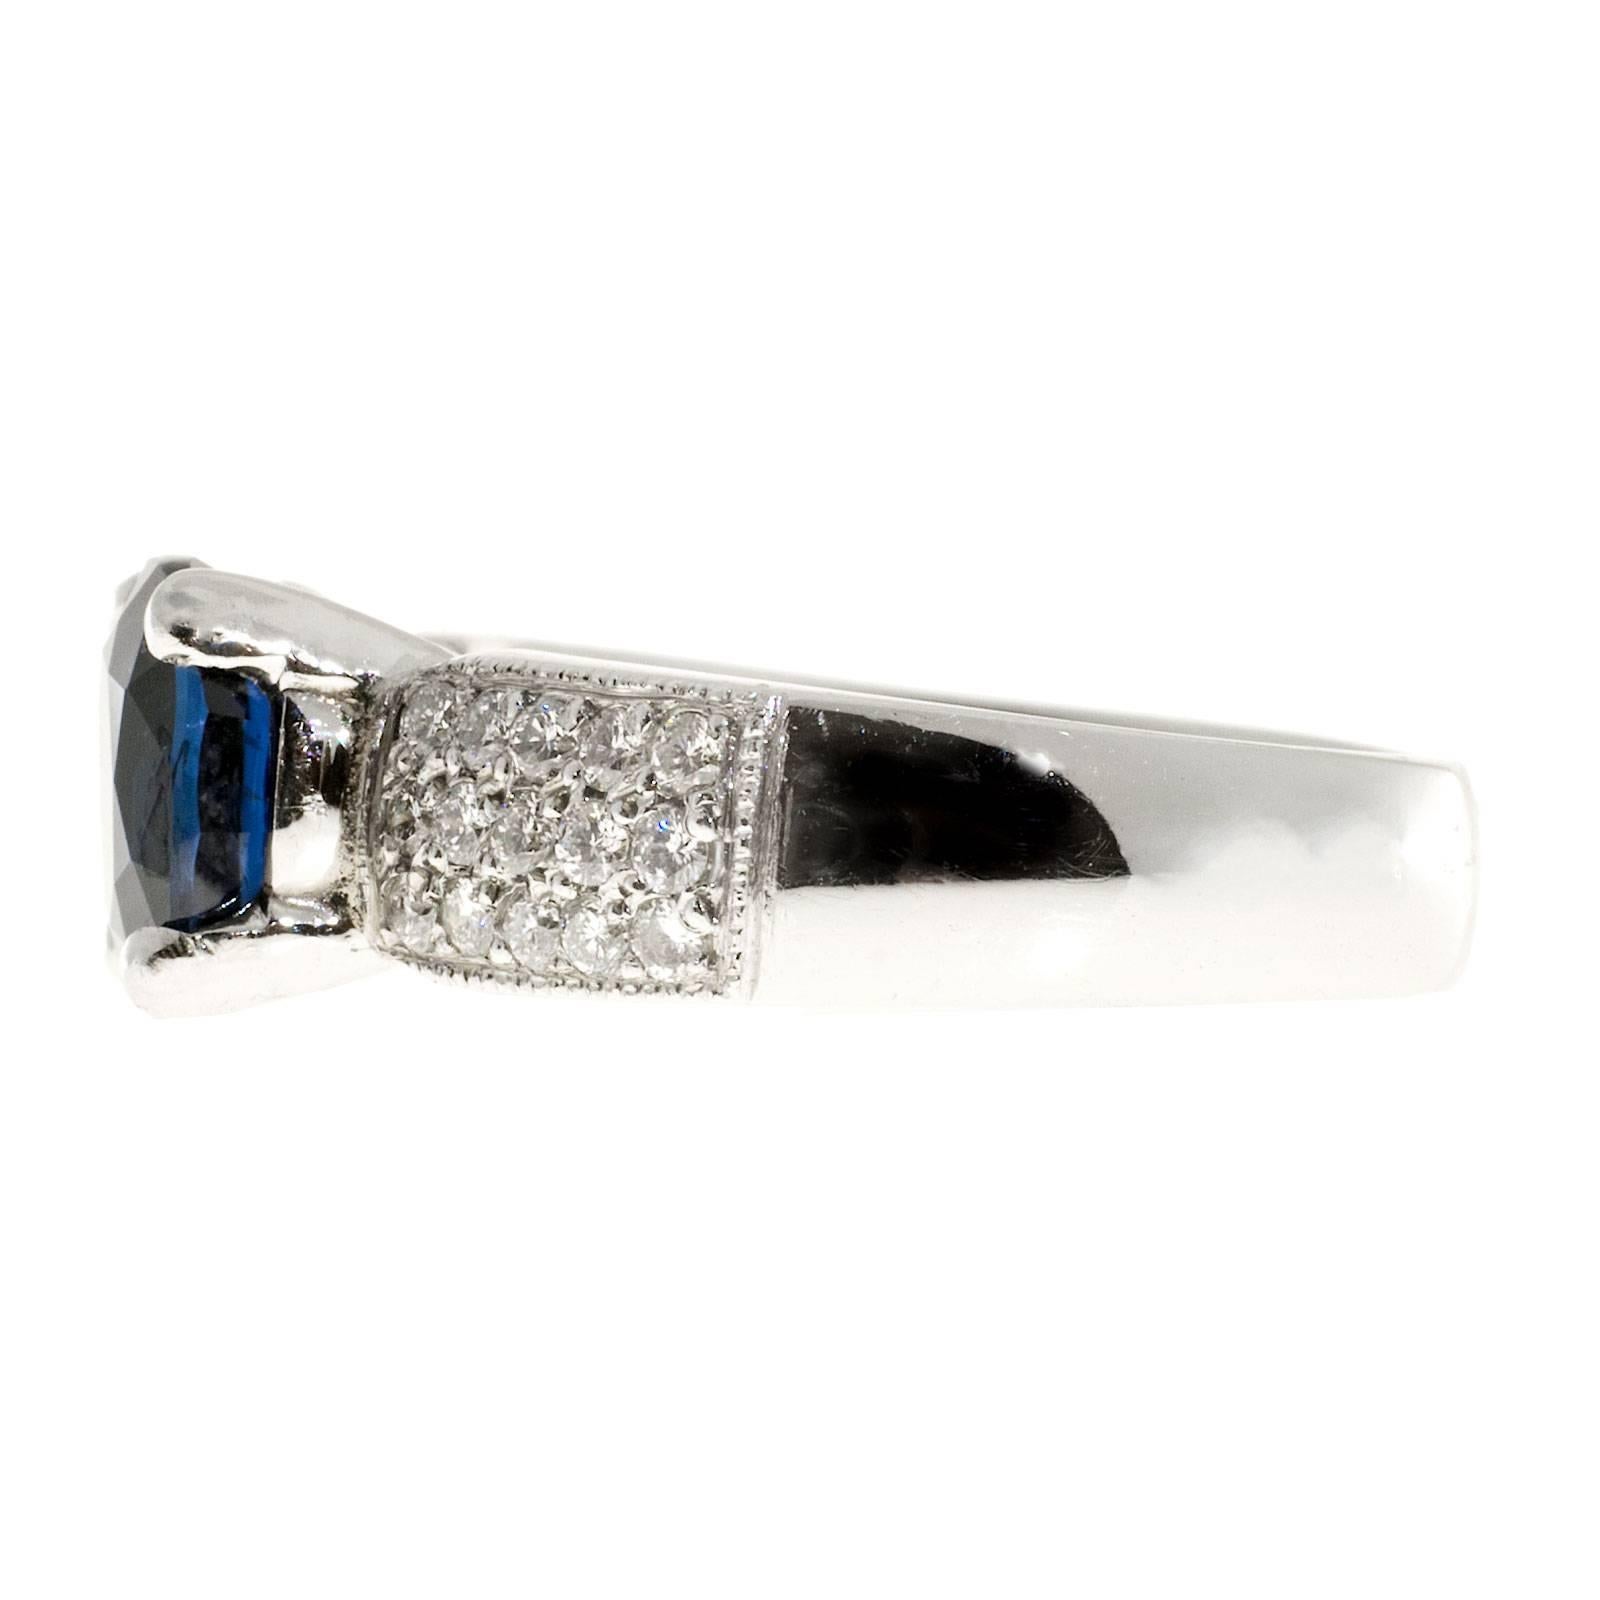 Cushion Cut GIA Certified 1.75 Carat Sapphire Diamond Engagement Ring